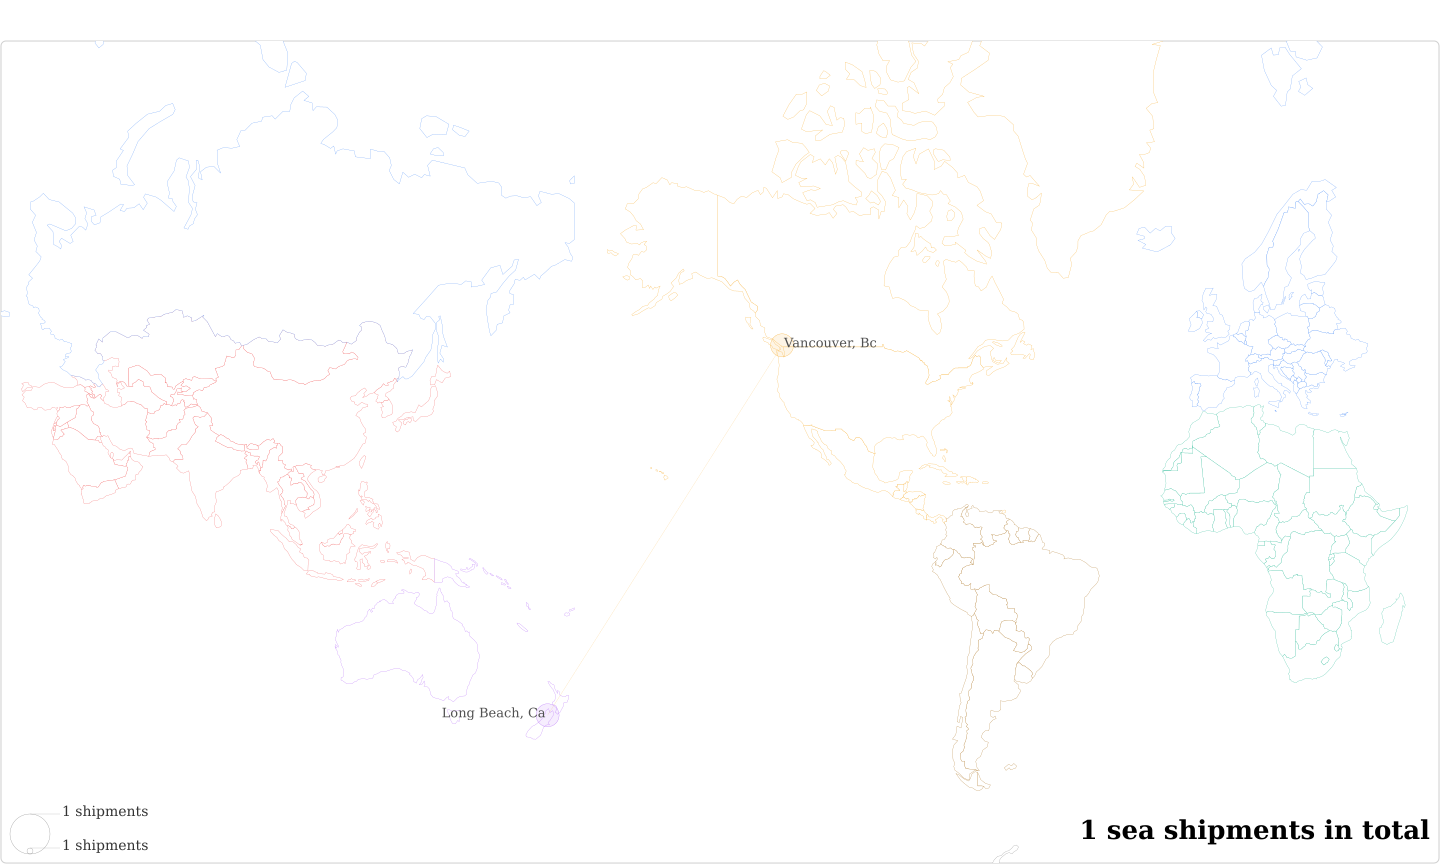 Tastie Distributors Unit's Imports Per Country Map